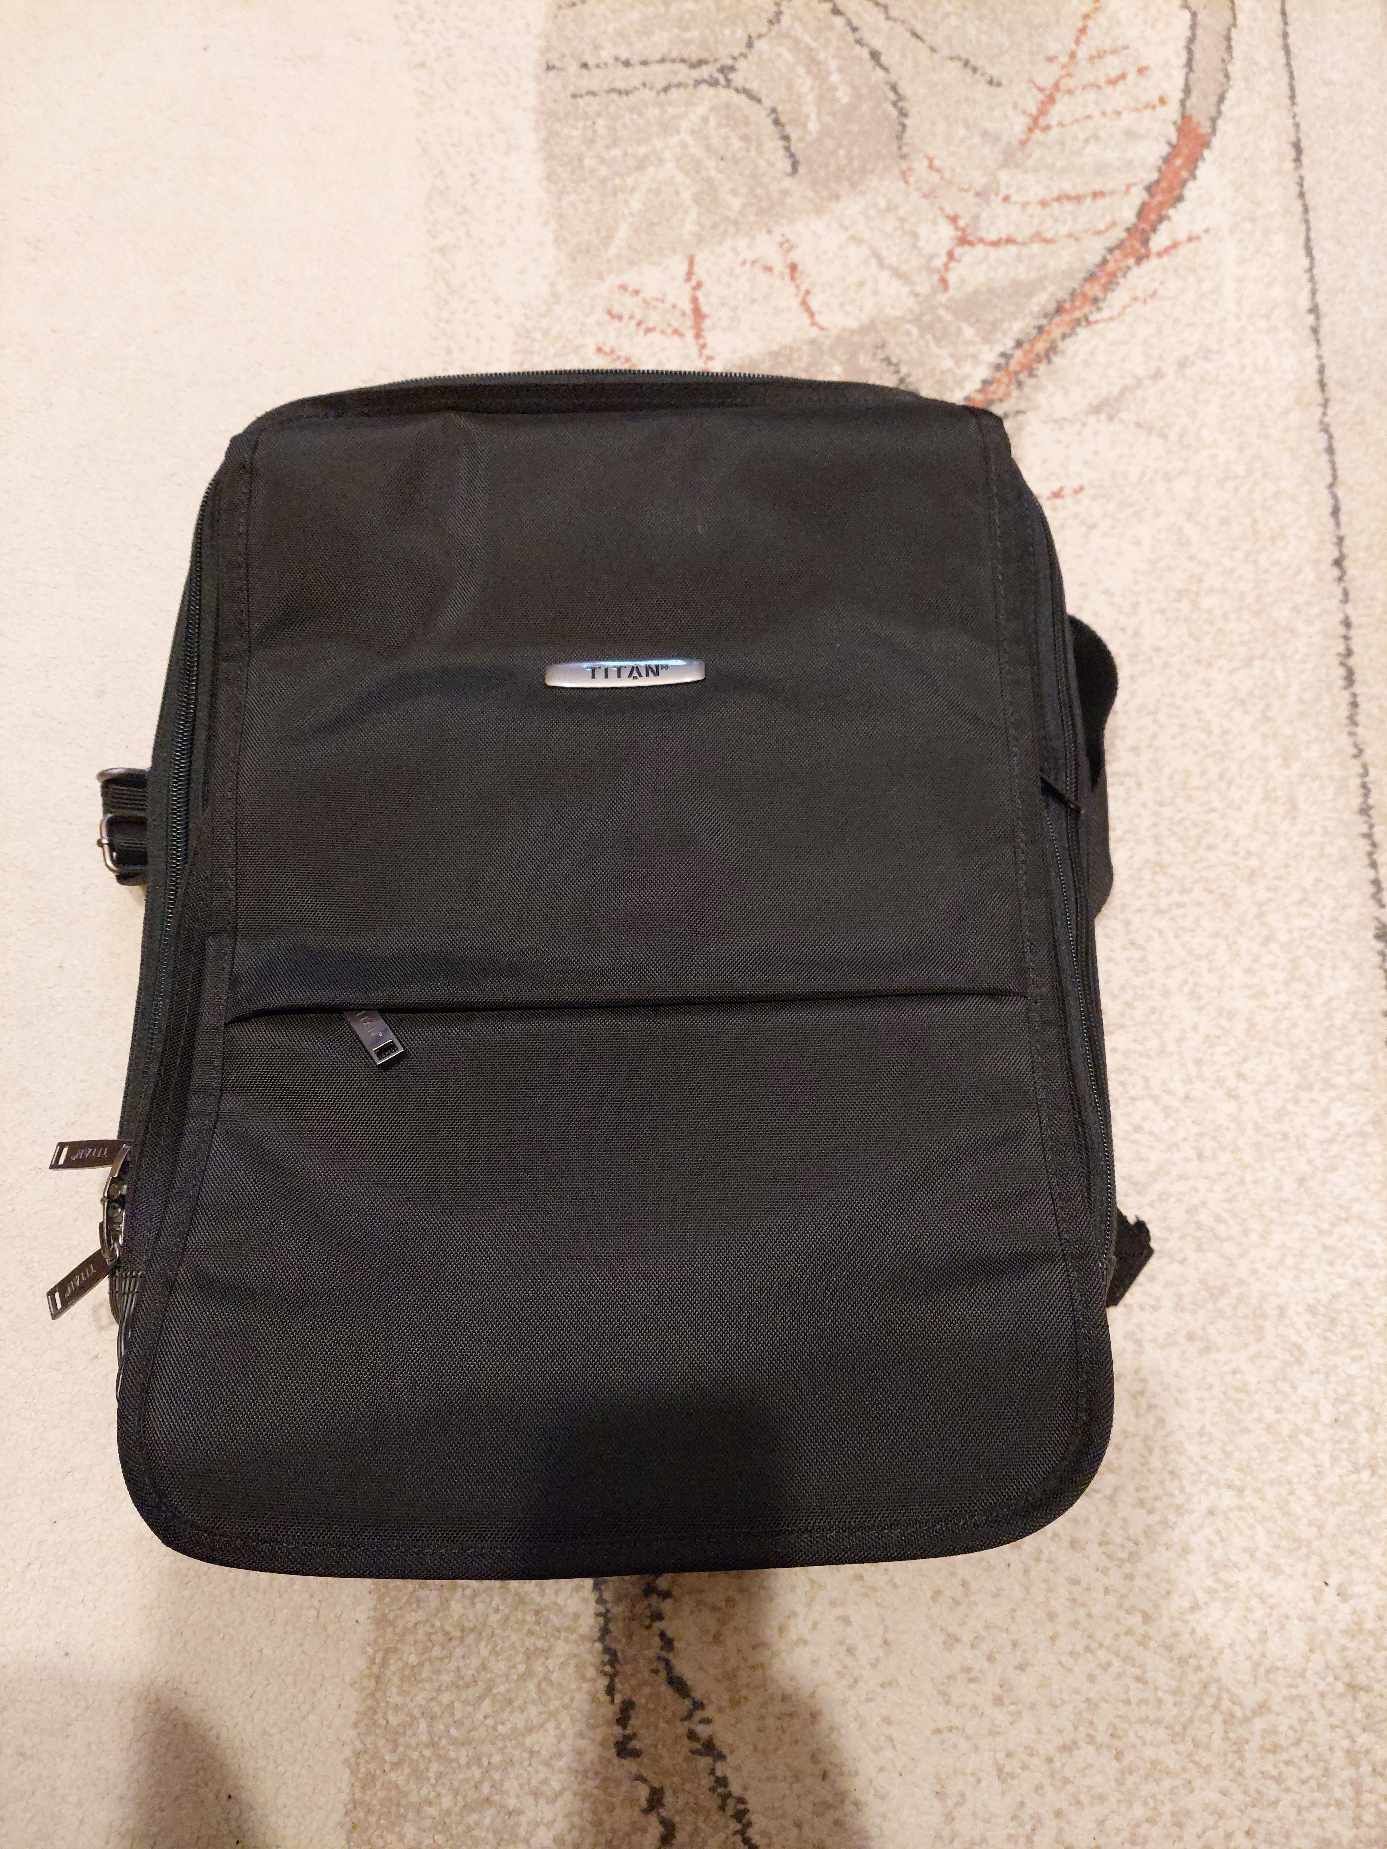 Torba plecak firmy TITAN na laptopa